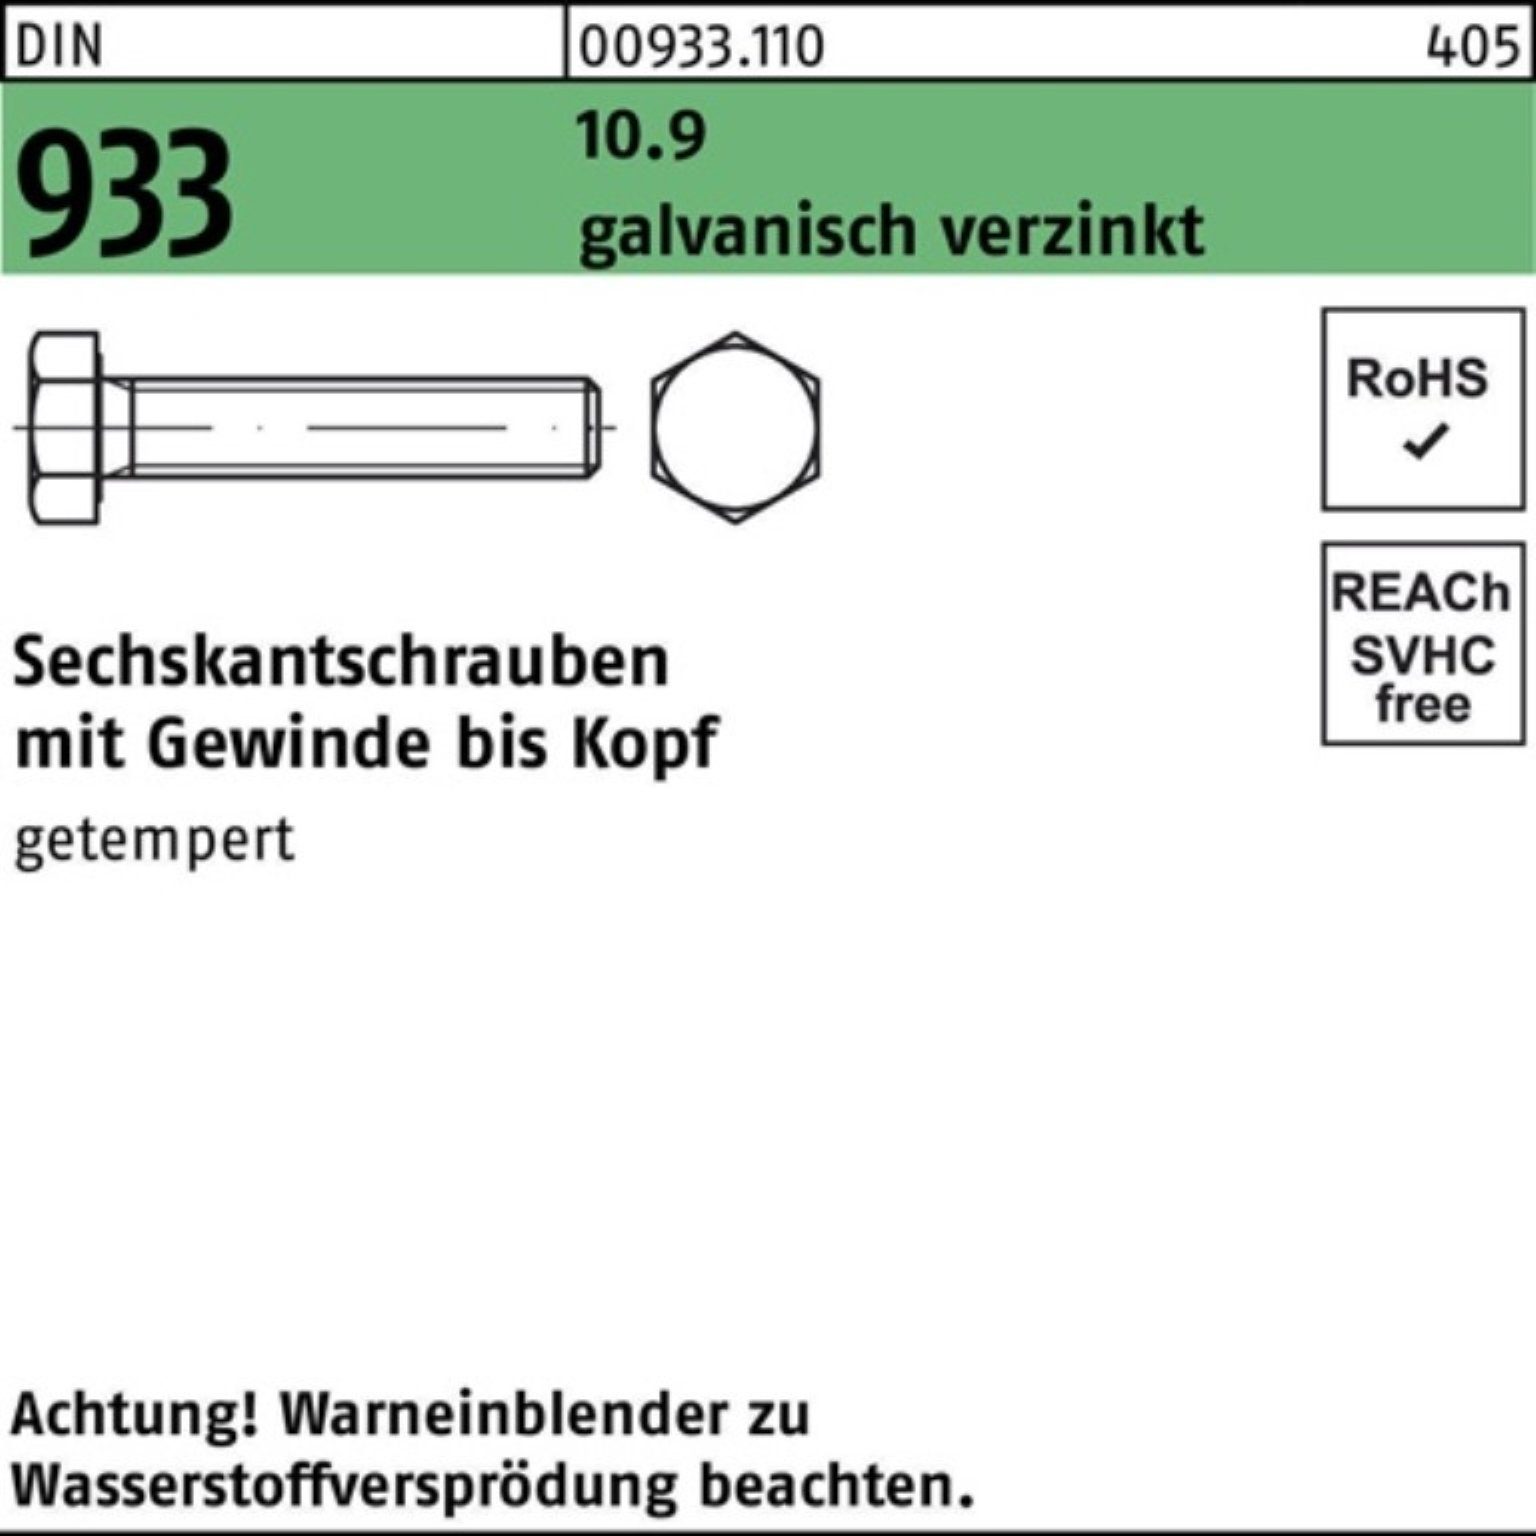 VG Sechskantschraube St 120 100er 933 galv.verz. Reyher DIN Sechskantschraube 1 M30x Pack 10.9